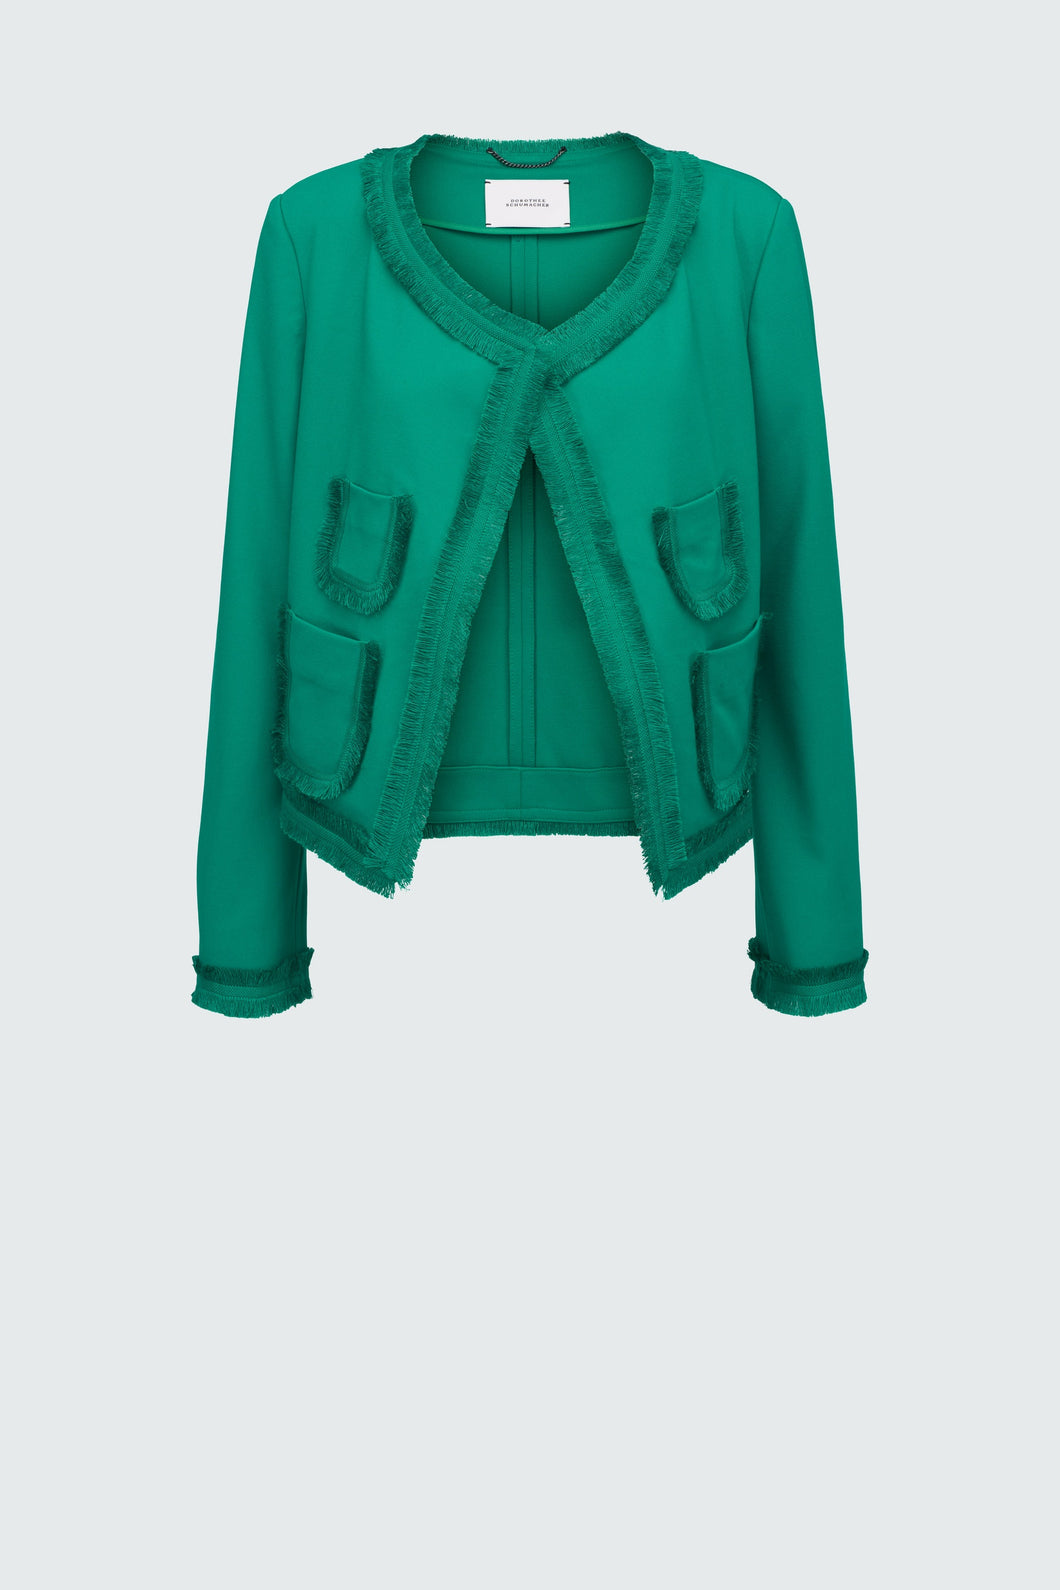 Dorothee-Schumacher-Emotional-Essence-jacket-in-Vibrant-Green-bowns-cambridge